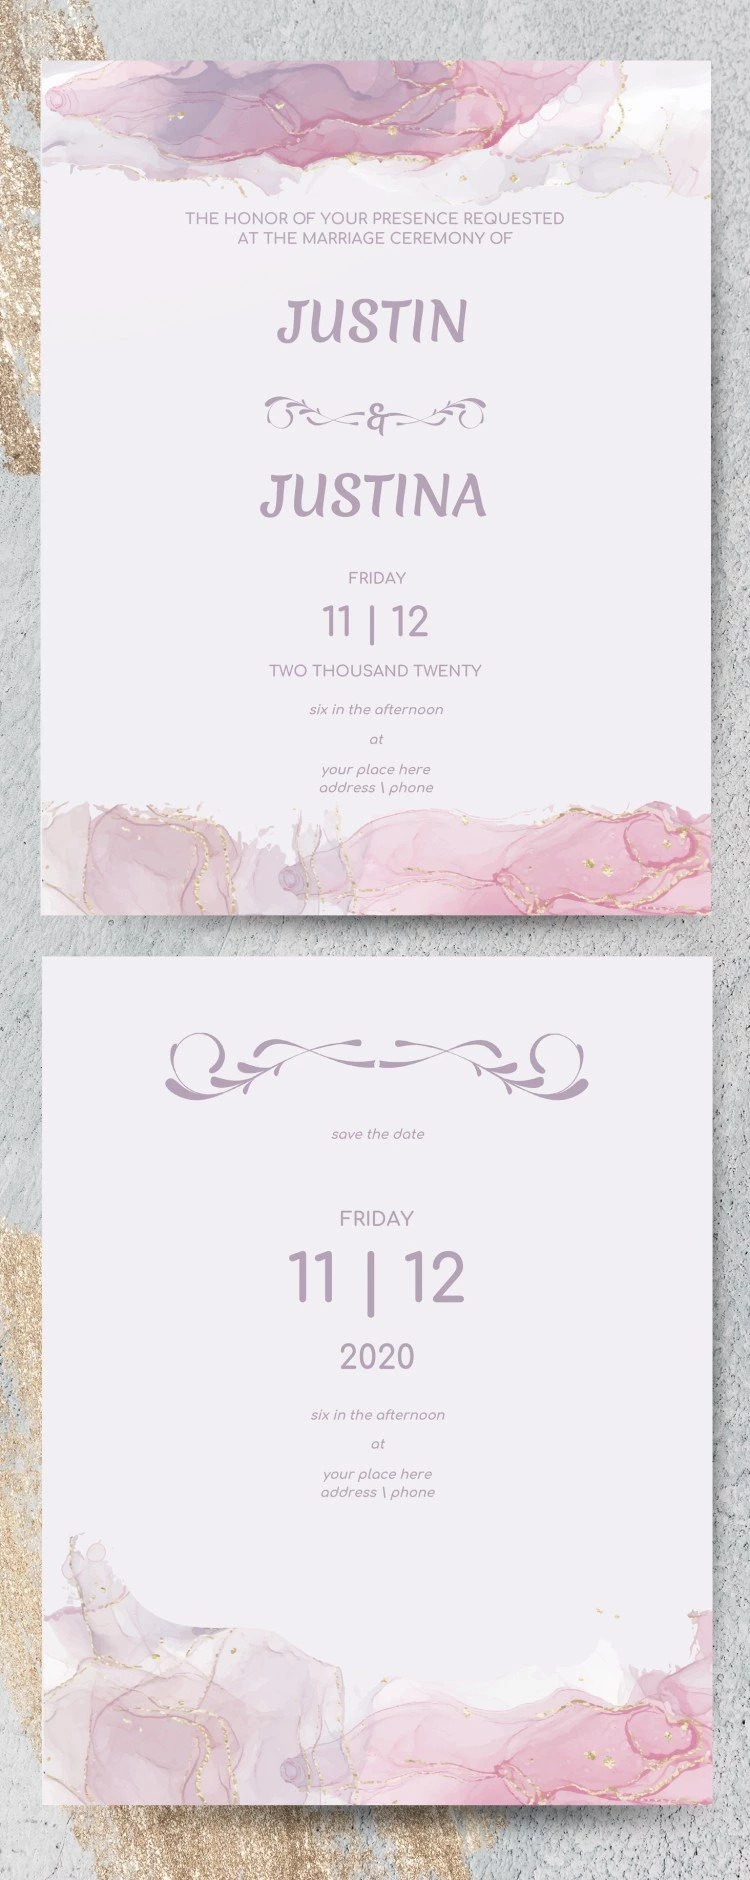 Perfect Wedding Invitation - free Google Docs Template - 10061589